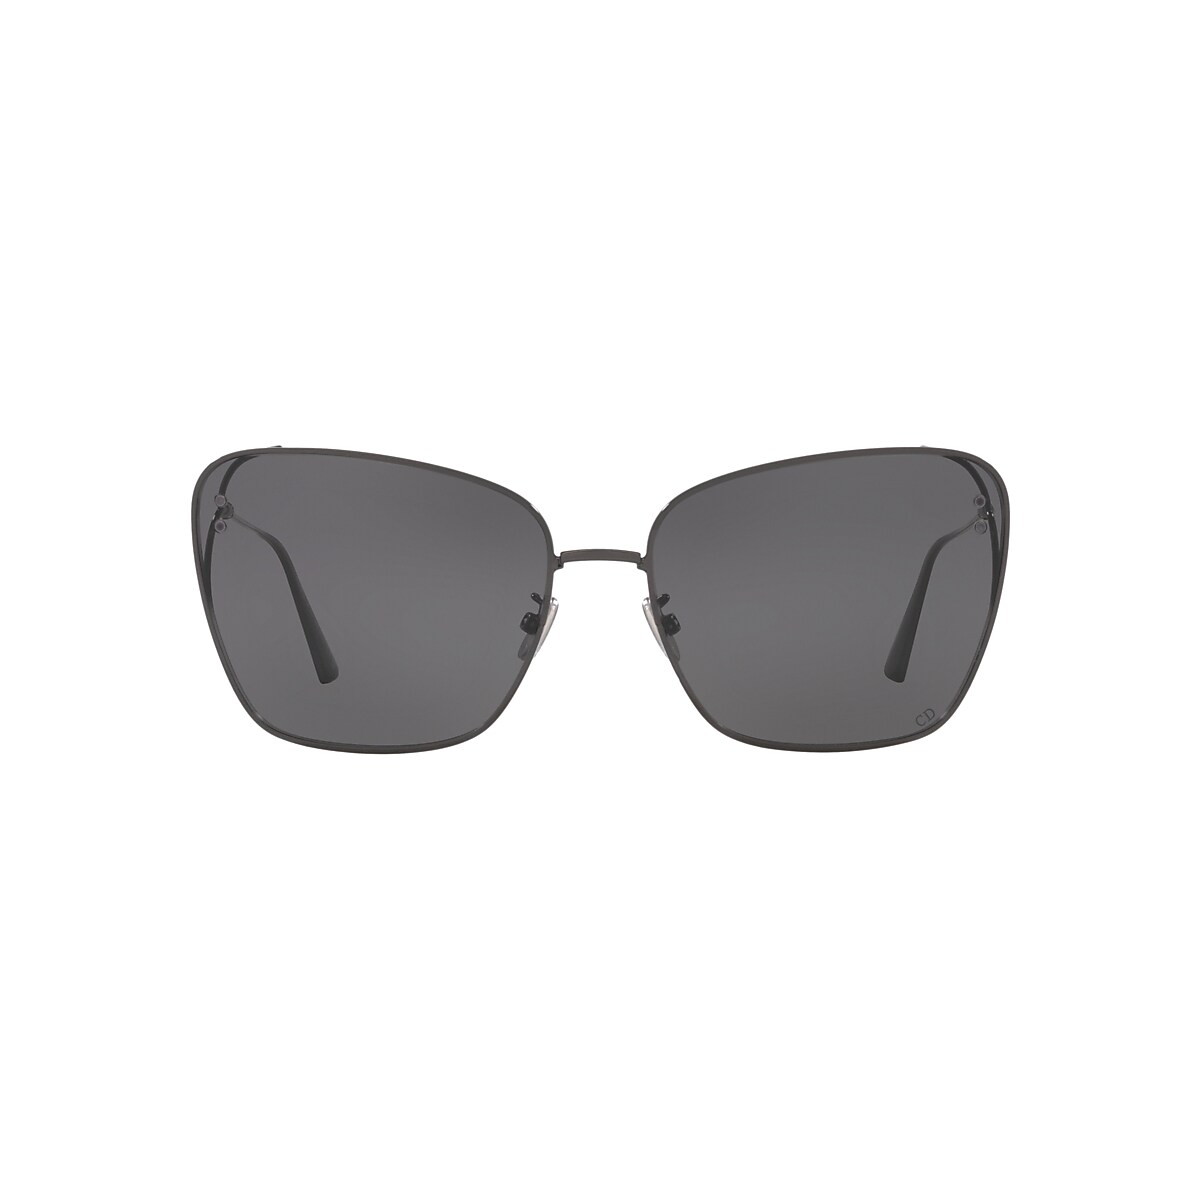 DIOR MissDior B2U Gunmetal Shiny - Woman Luxury Sunglasses, Grey Lens